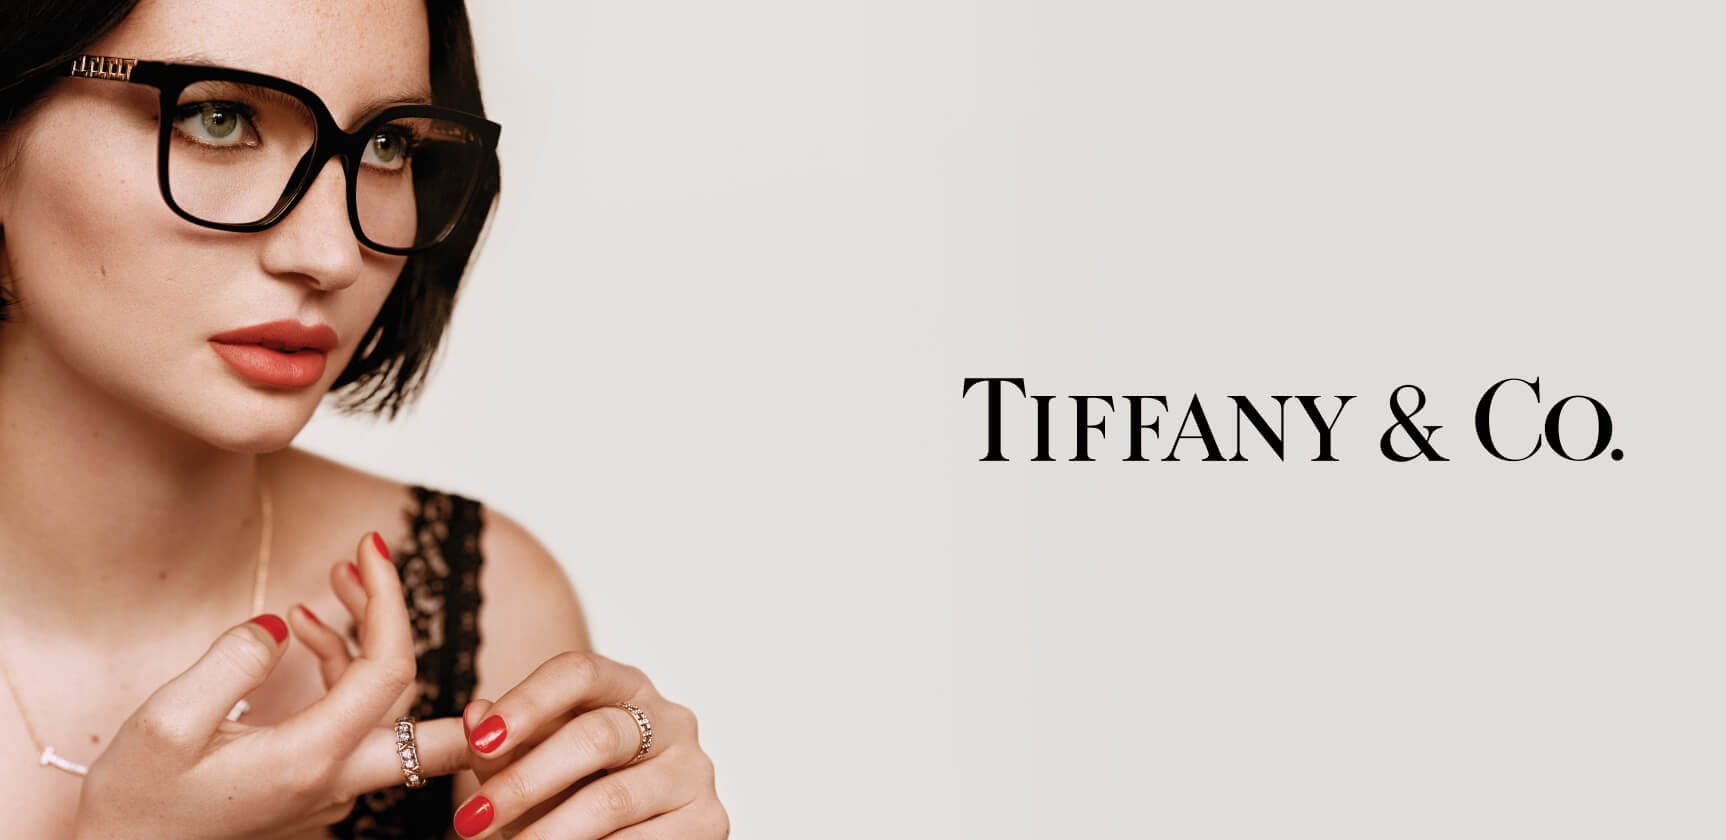 Tiffany image